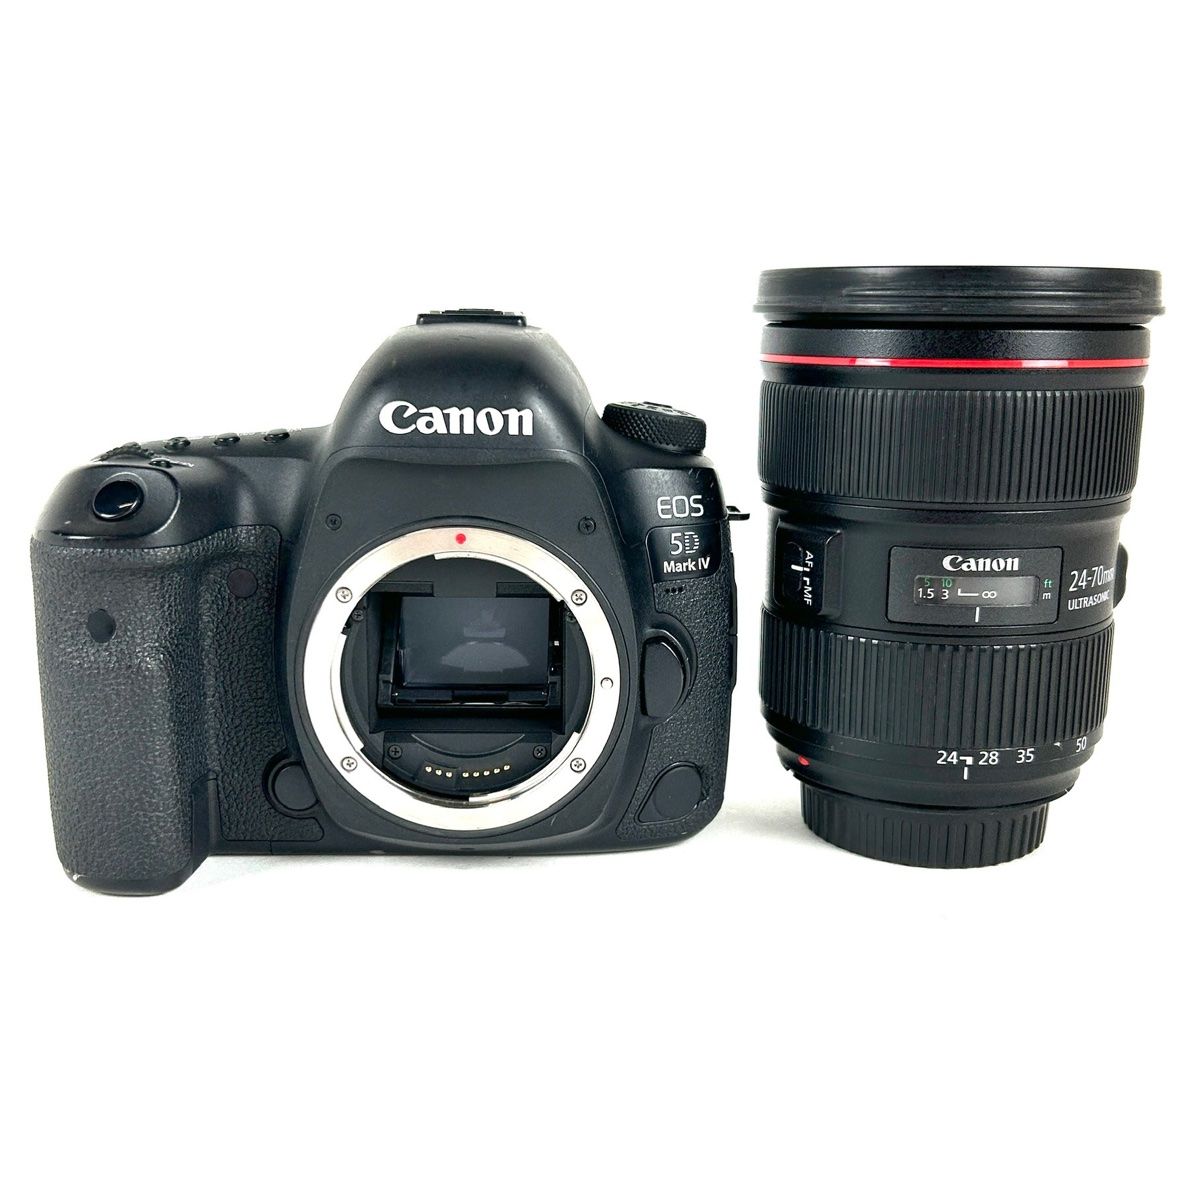 Canon EOS 5D Mark IV EF24-10